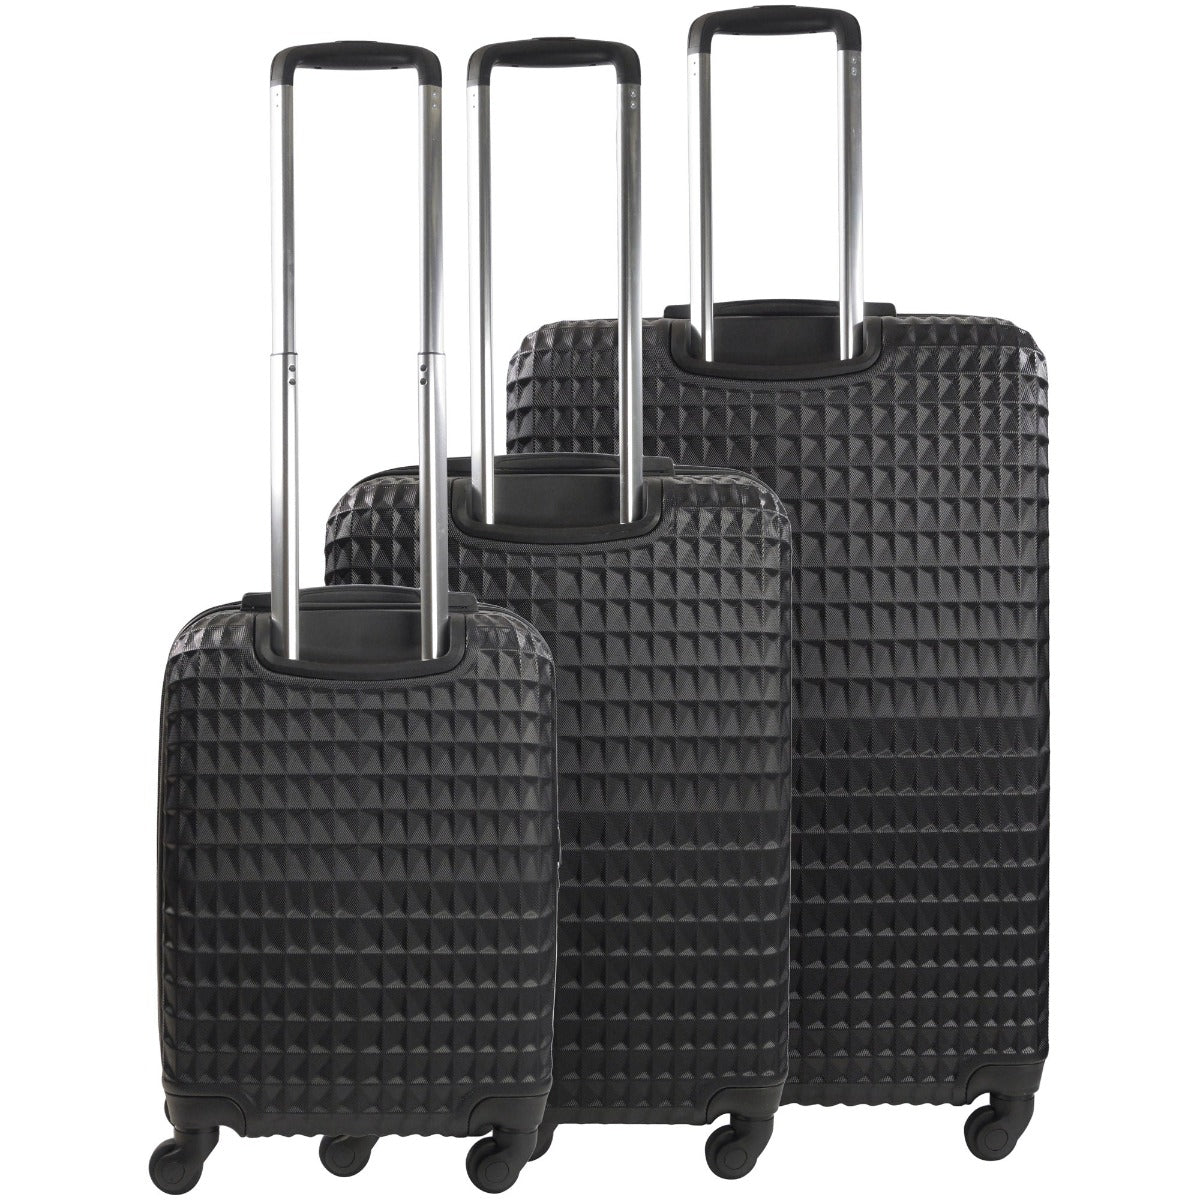 Ful Geo hard sided spinner suitcase hard sided 3 piece luggage set black